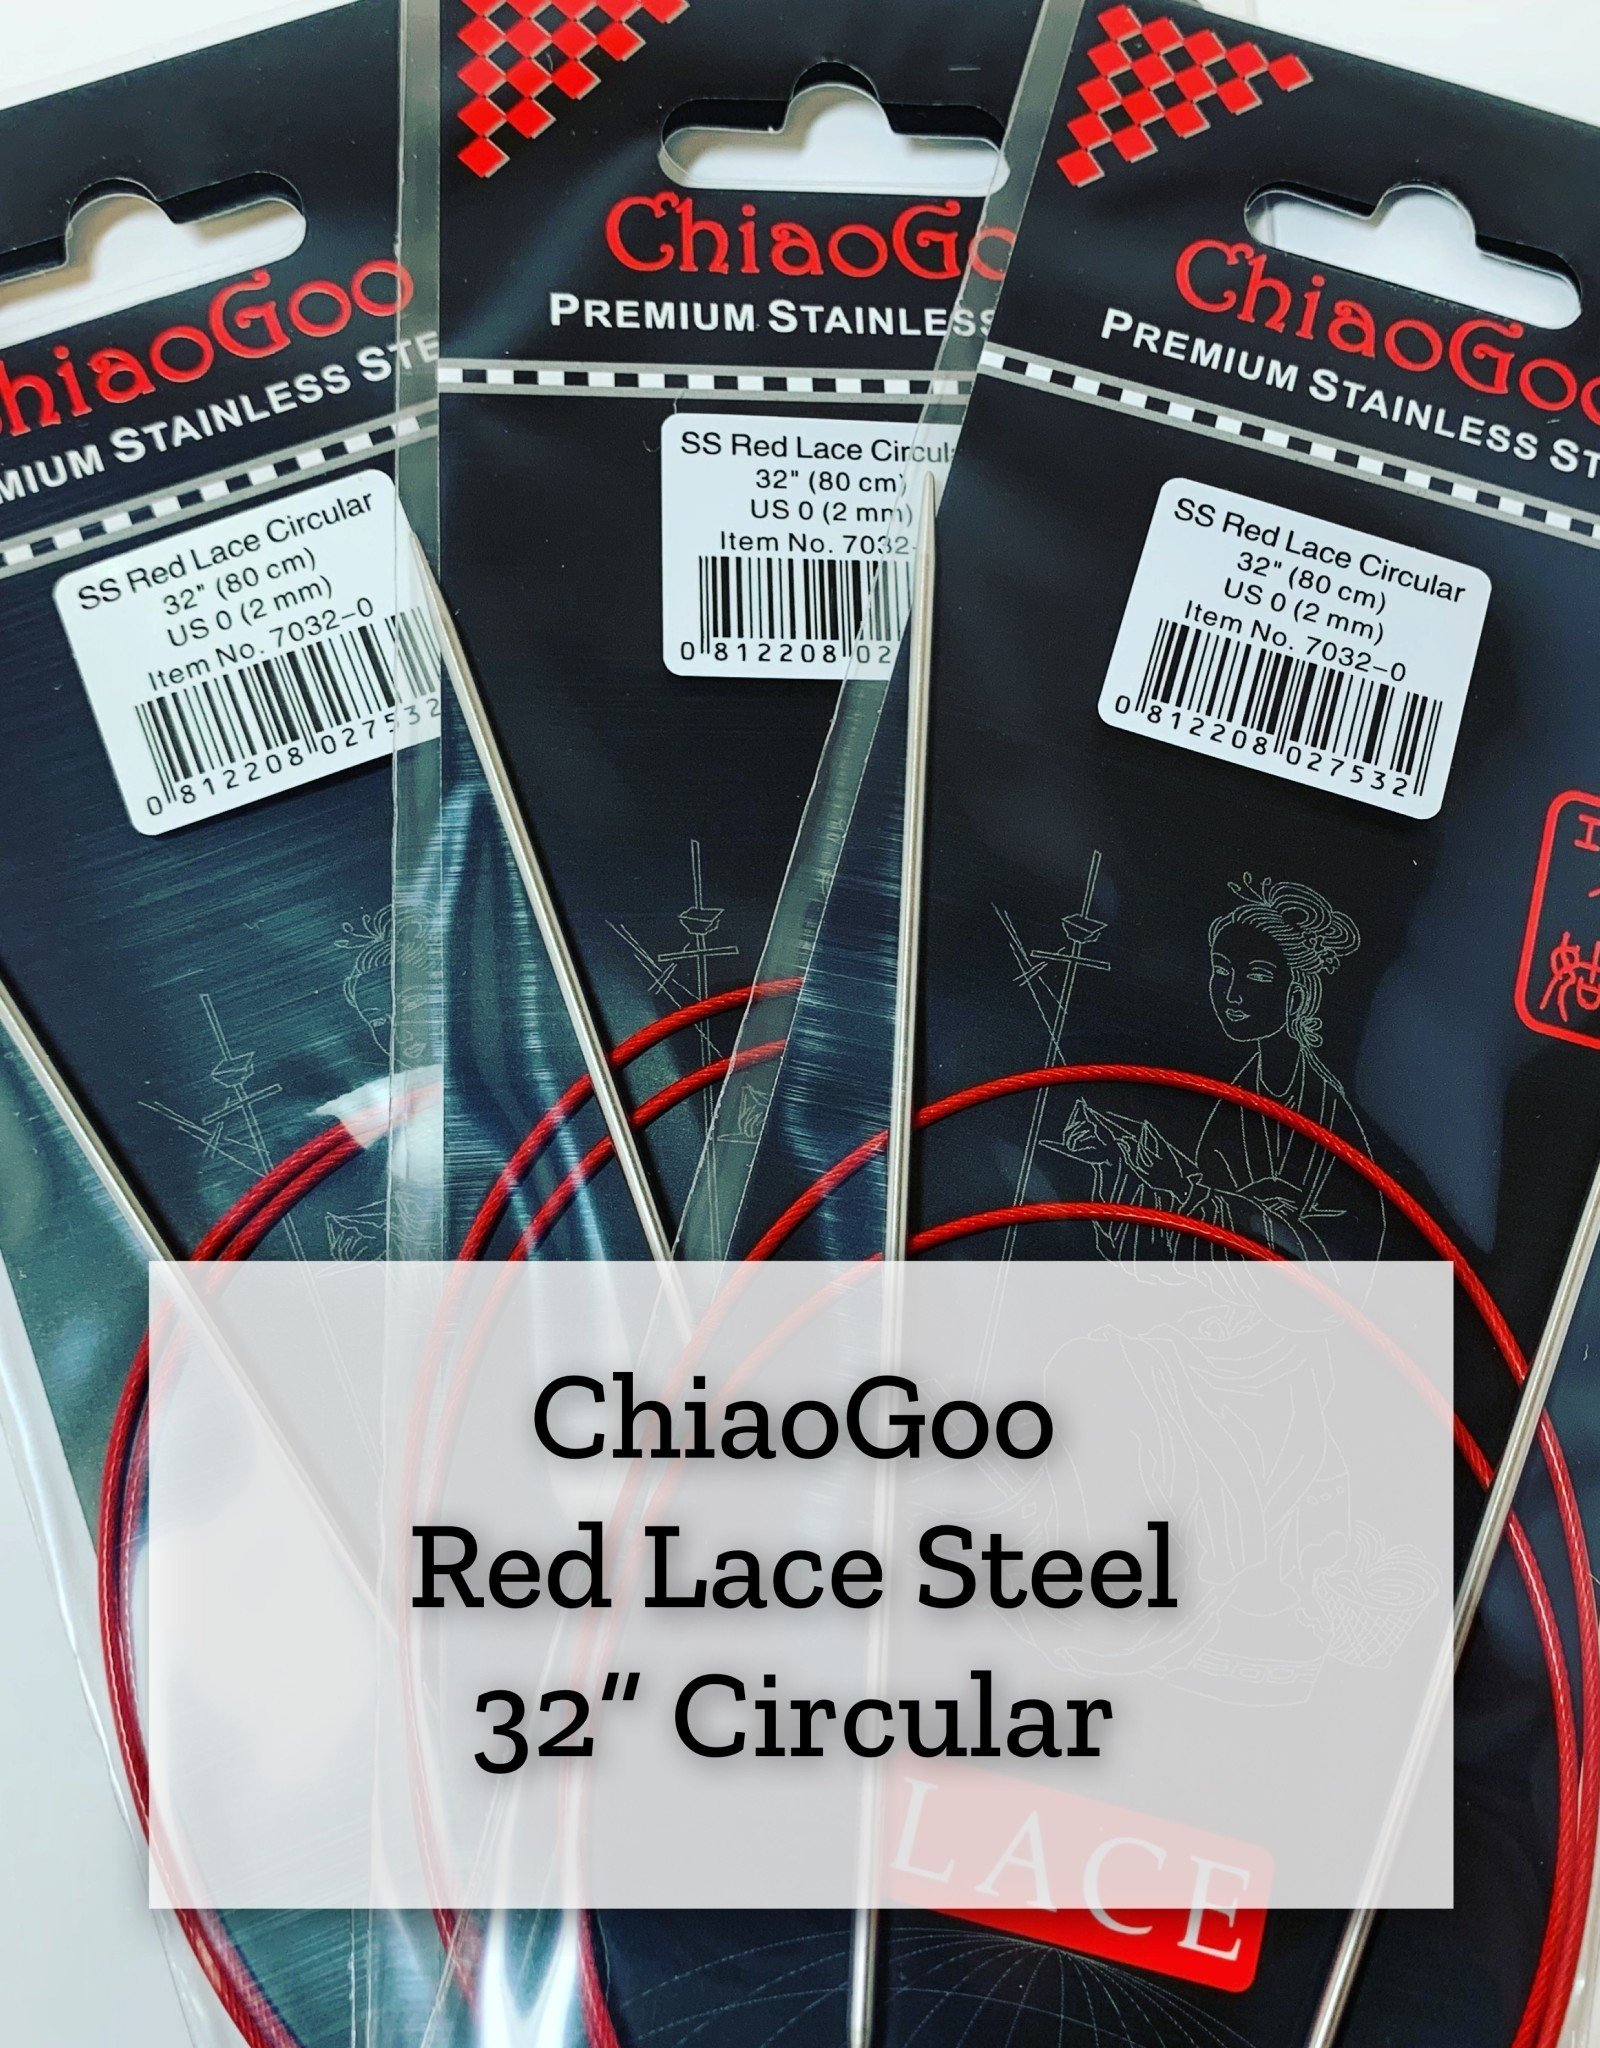 ChiaoGoo Red Lace Steel - 32" 3.25 mm